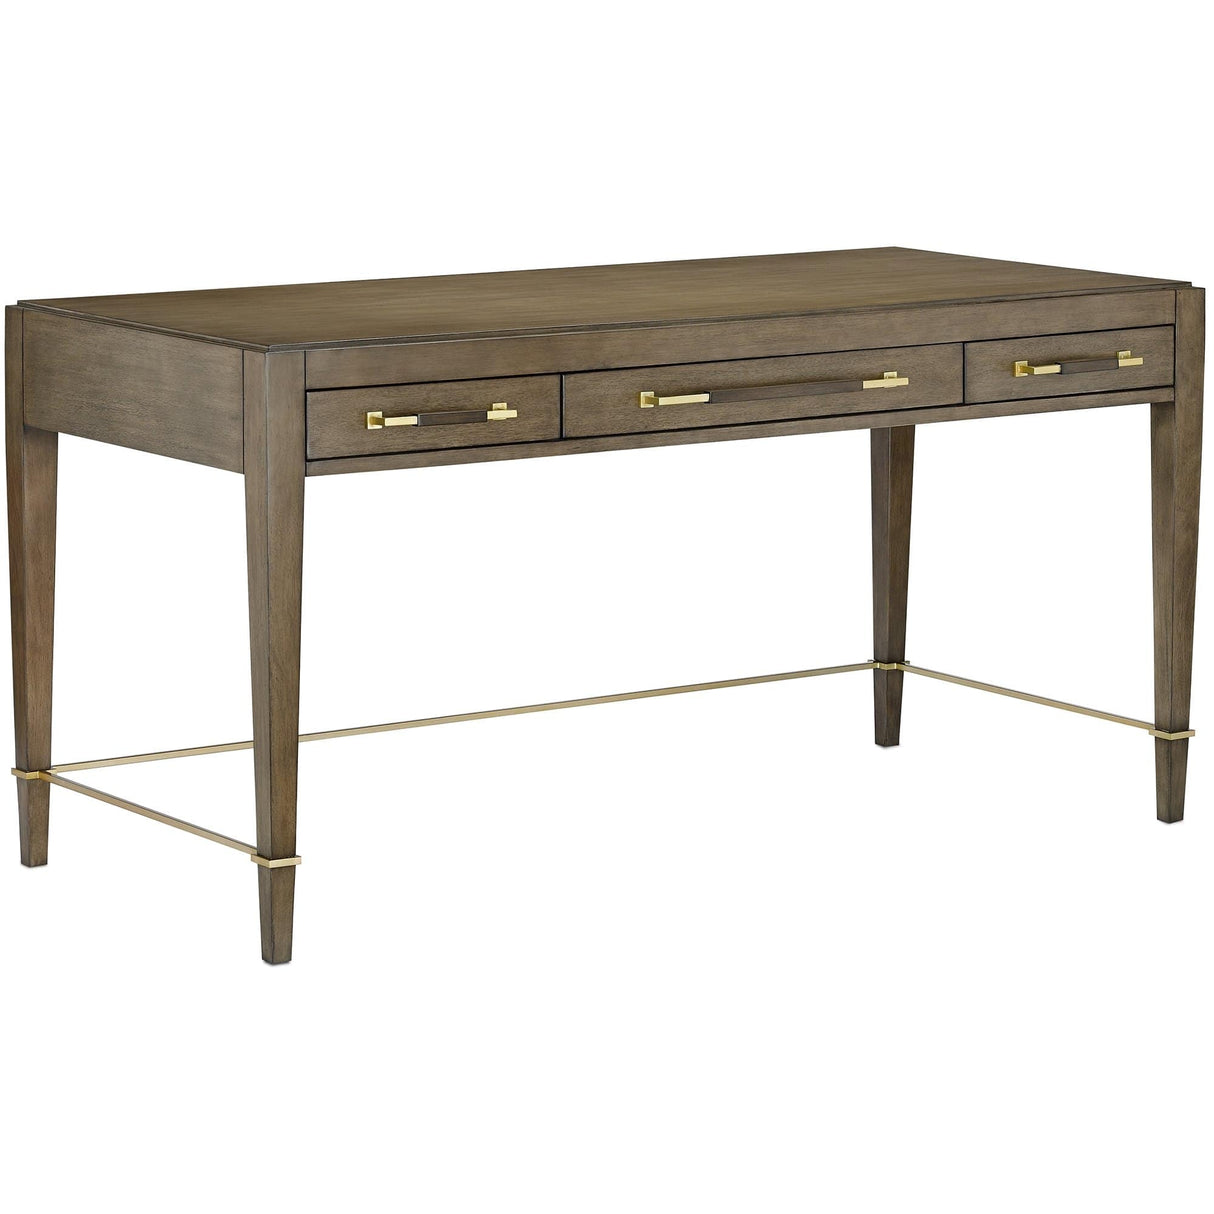 Currey and Company Verona Chanterelle Desk Furniture currey-co-3000-0131